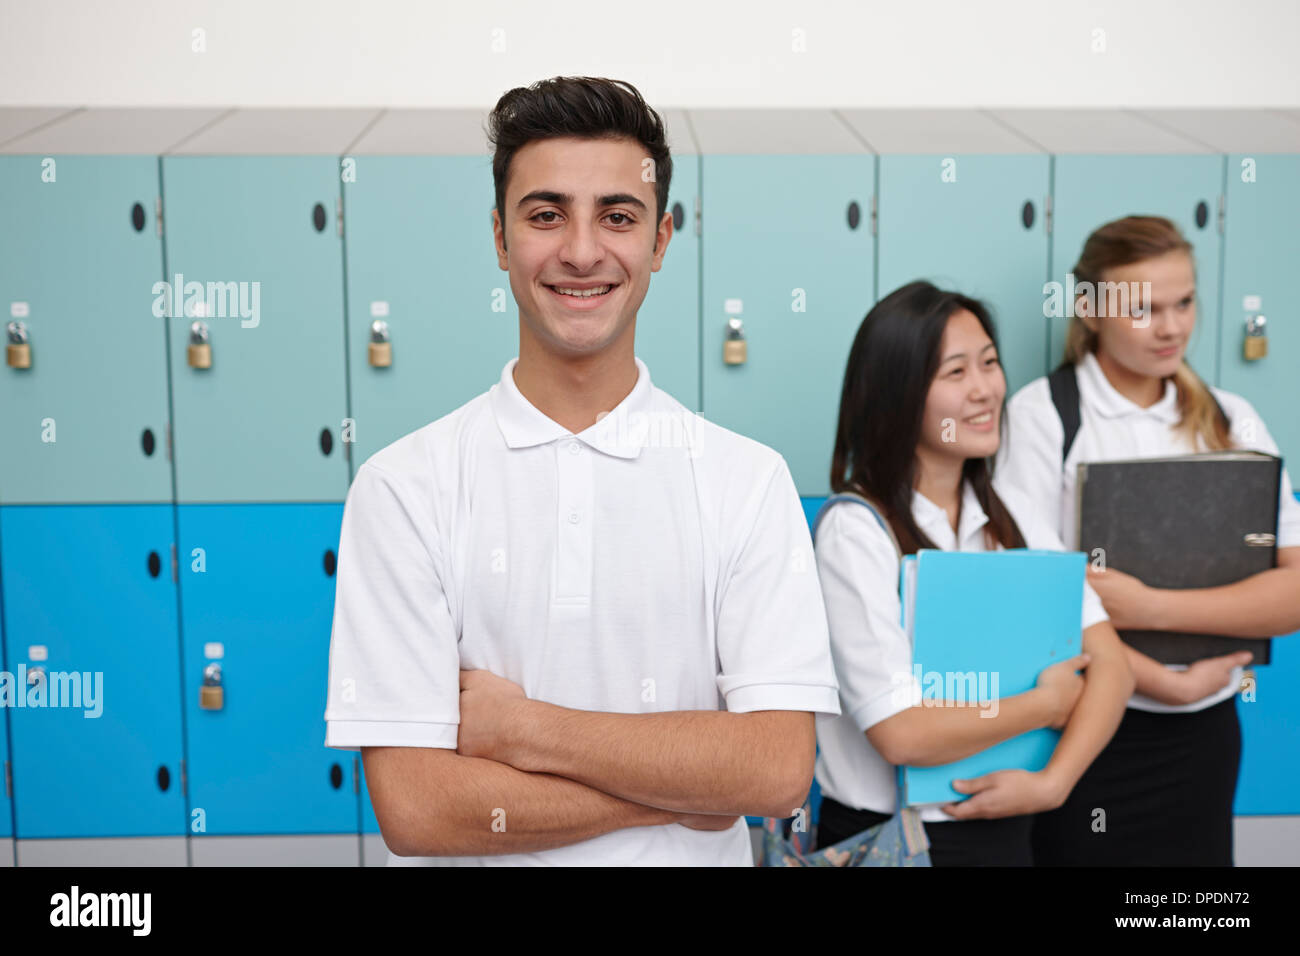 Portrait of teenage schoolboy next to lockers Stock Photo